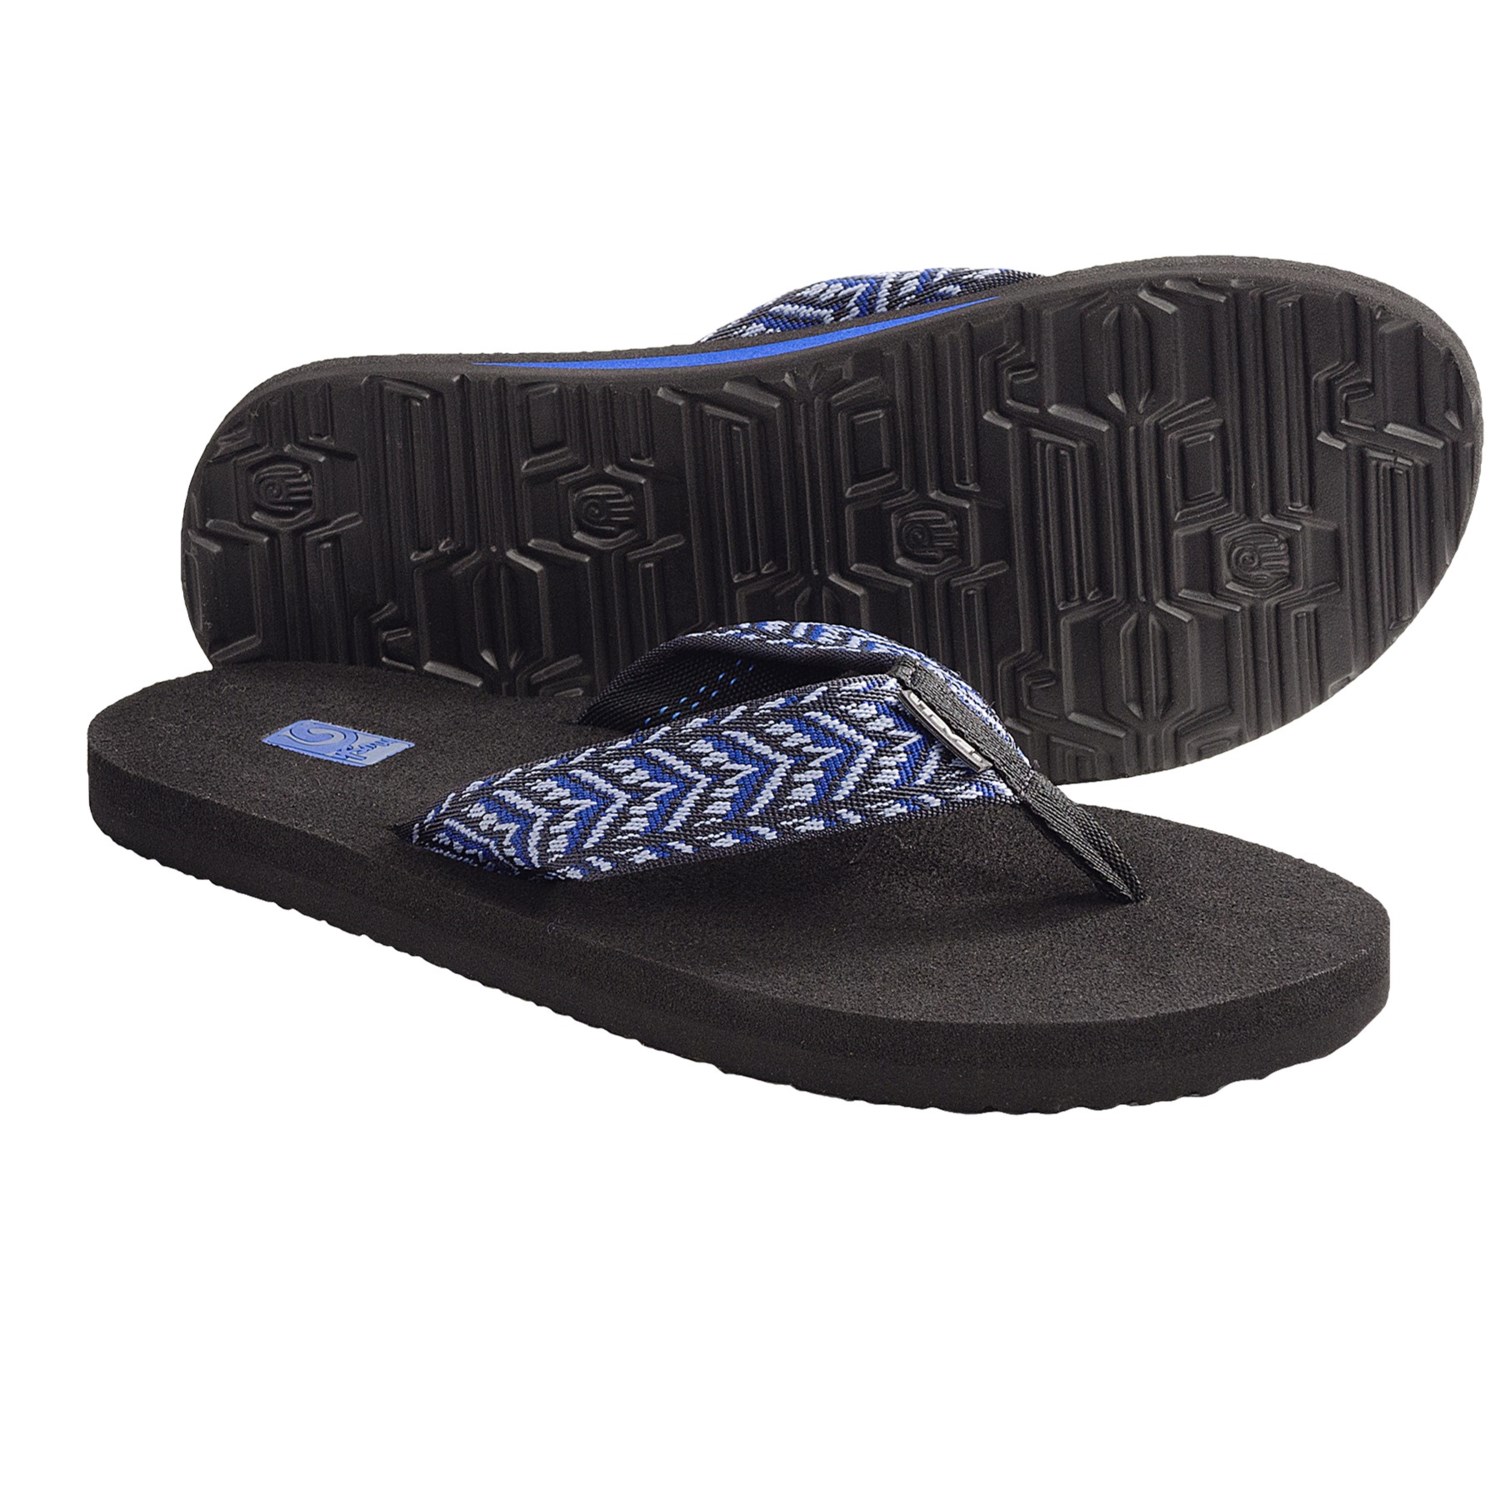 Teva Mush II Thong Sandals - Flip-Flops (For Men) in Geo Ethnic Blue